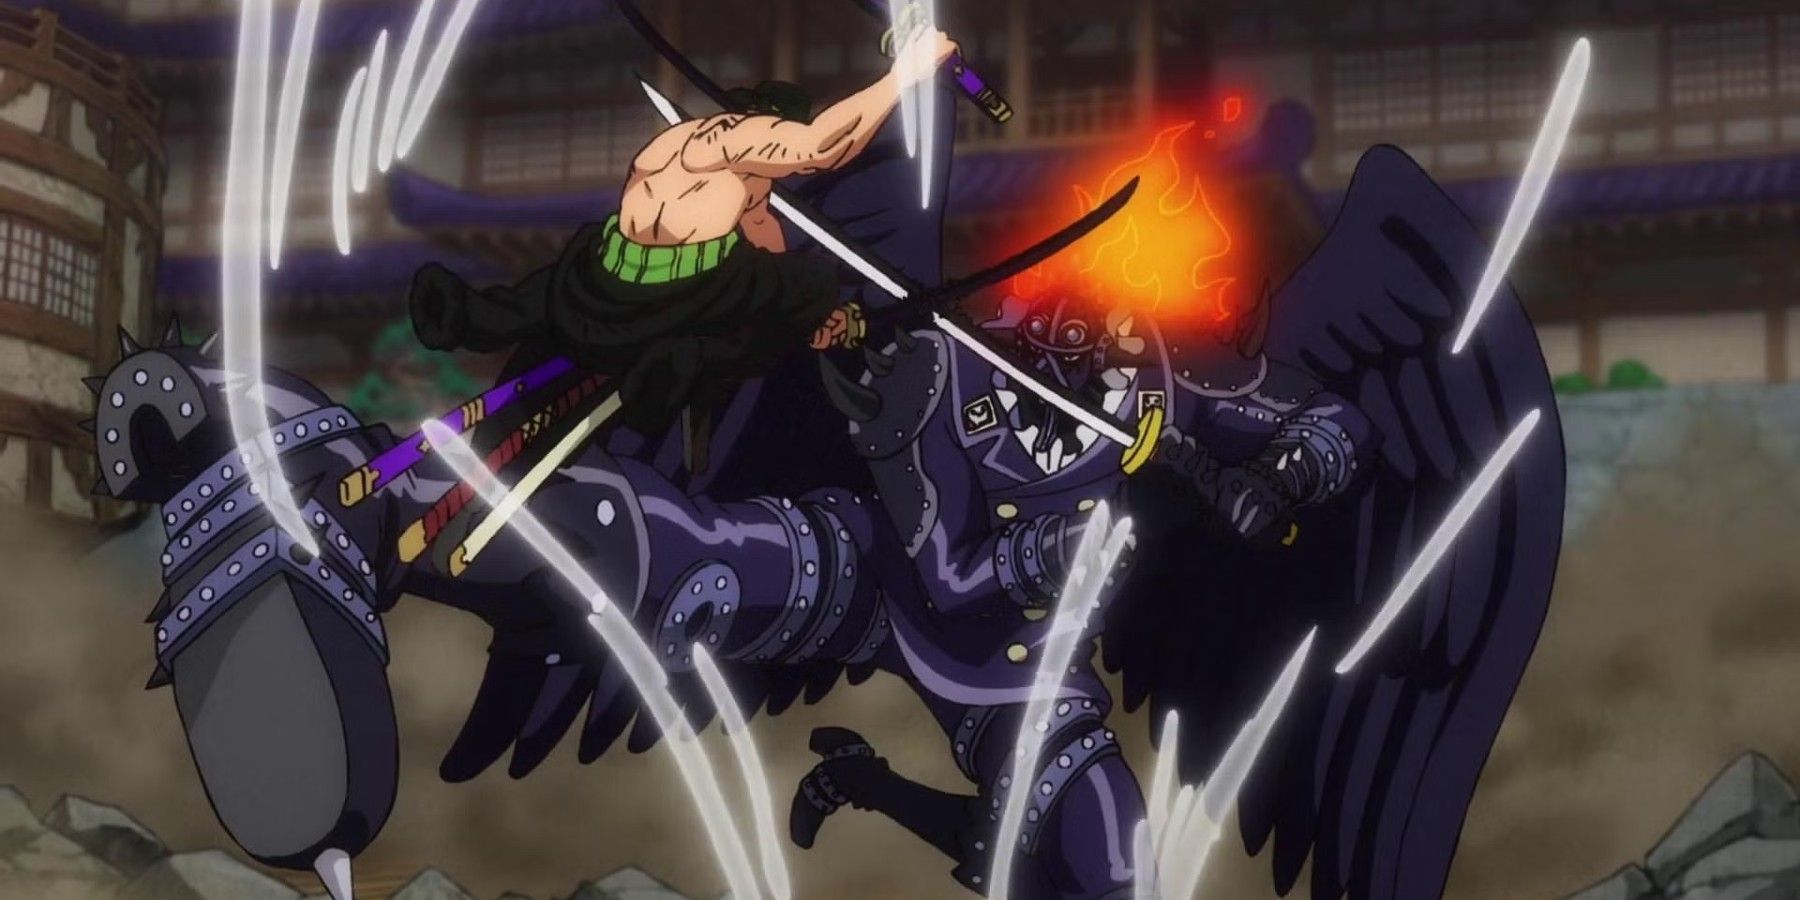 Zoro vs King during the Onigashima raid in One Piece.